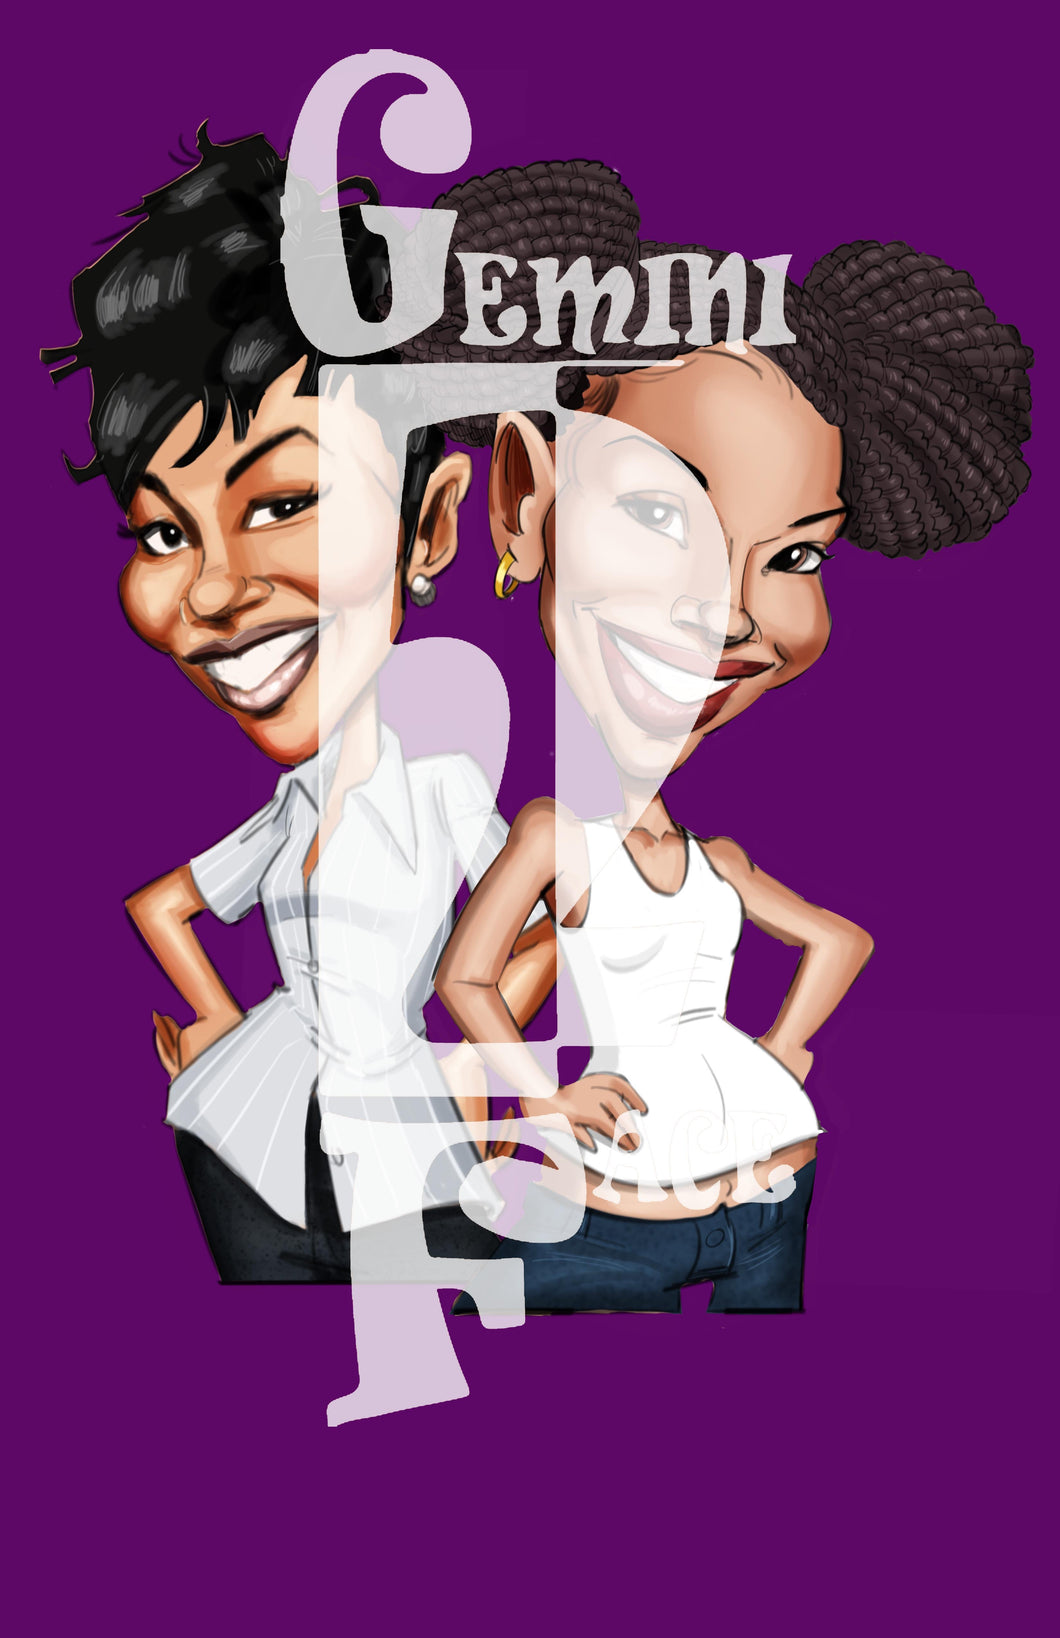 Brandy & Monica w/o background PNG PNG File Gemini2face Art E-Store 